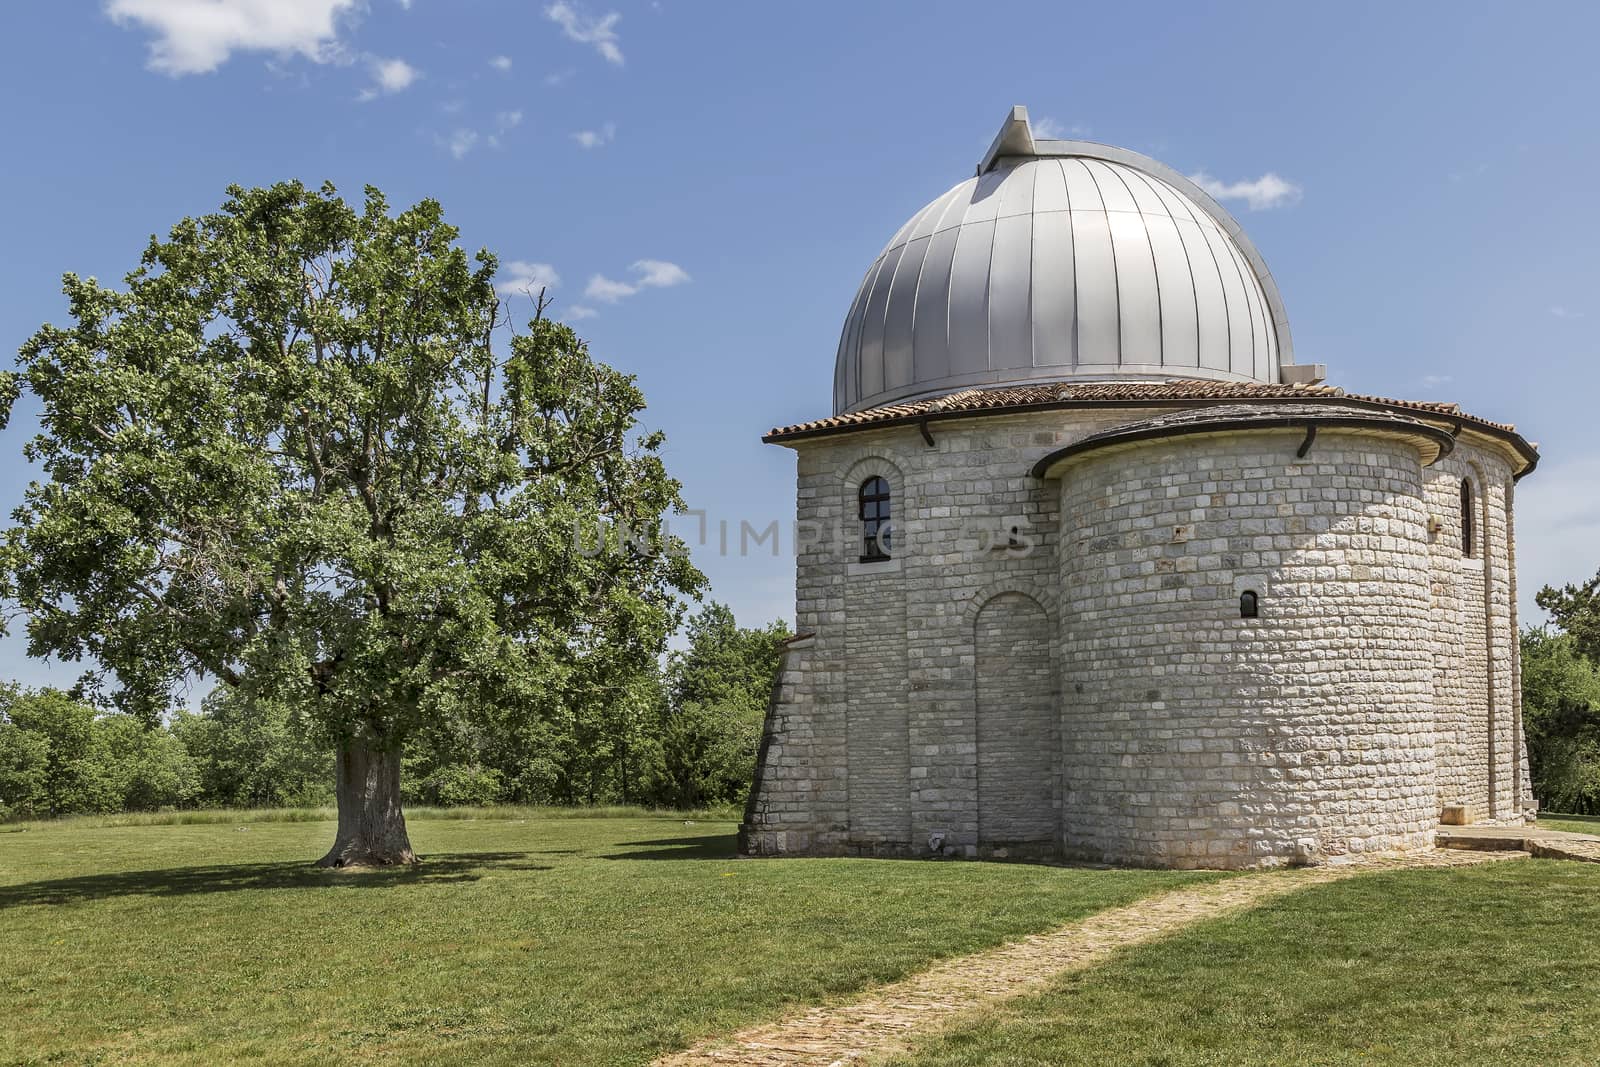 Astronomical observatory, Tican - Visnjan, Istria, Croatia by sewer12